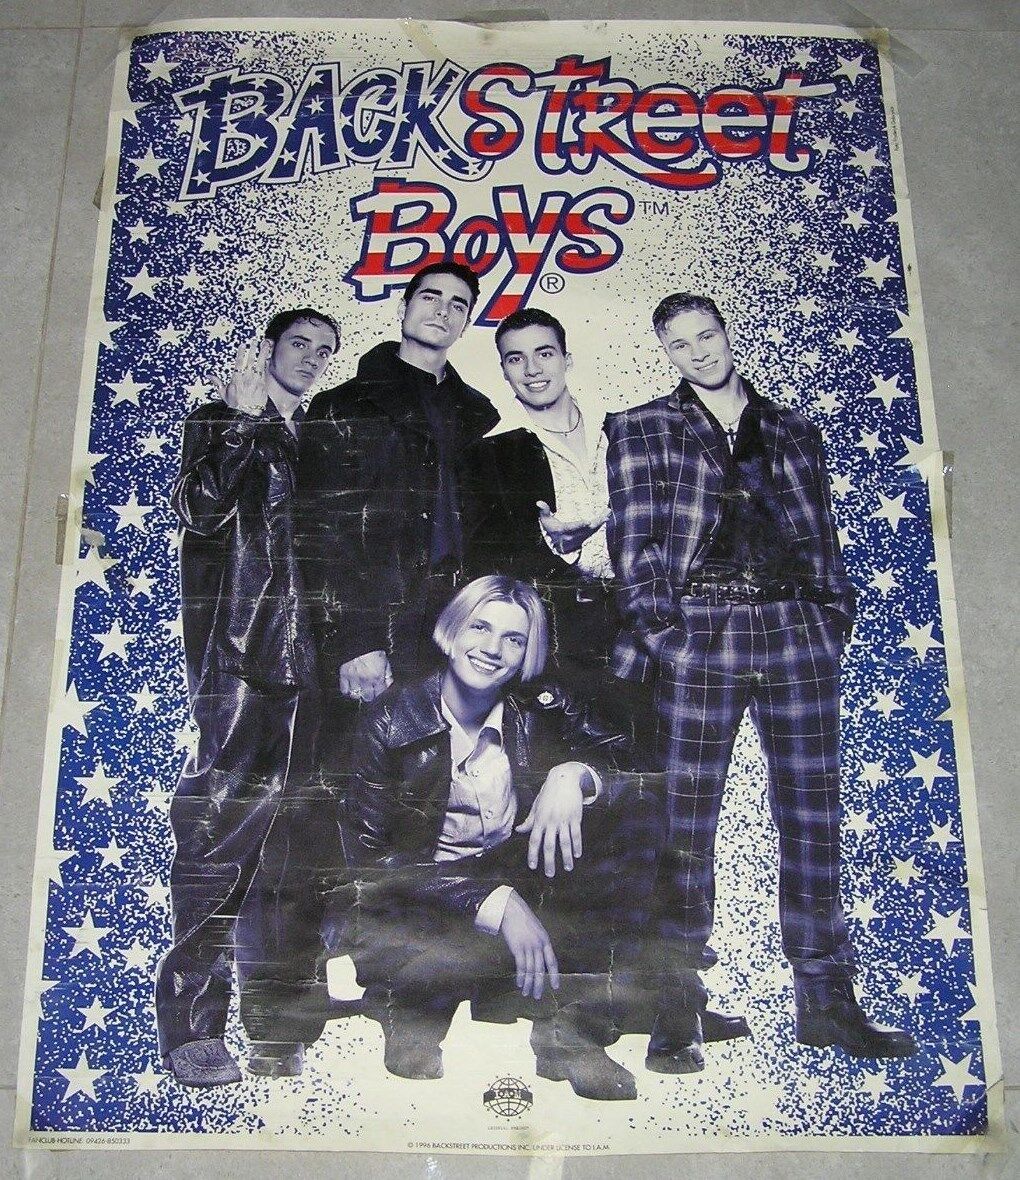 Backstreet Boys Rare Original Official Huge Poster 33"x24" 1996